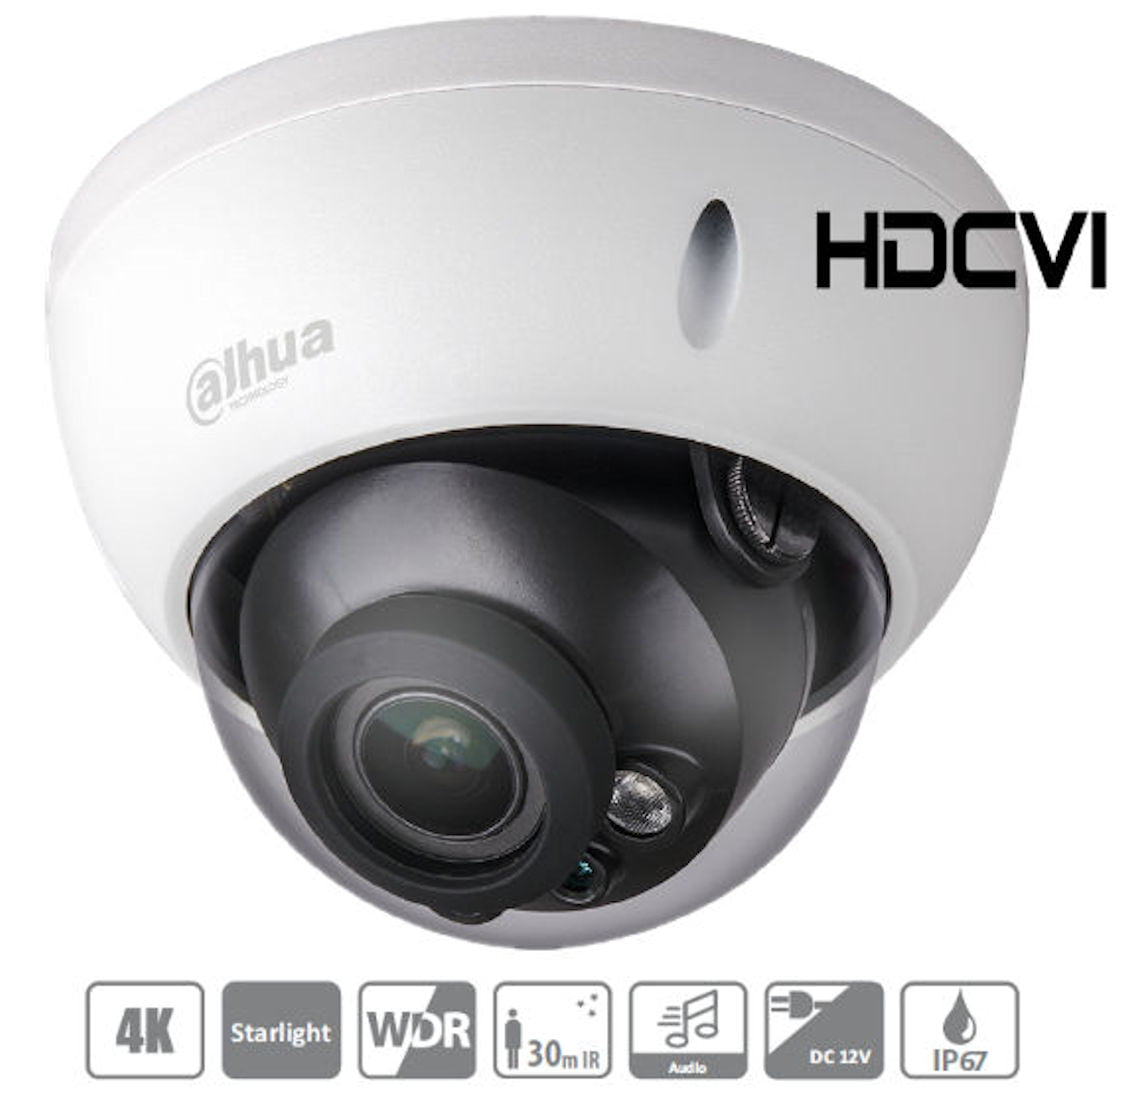 Dahua A82AM52 Pro-Series Starlight 4K HDCVI IR Dome Camera, 2.8mm Fixed Lens